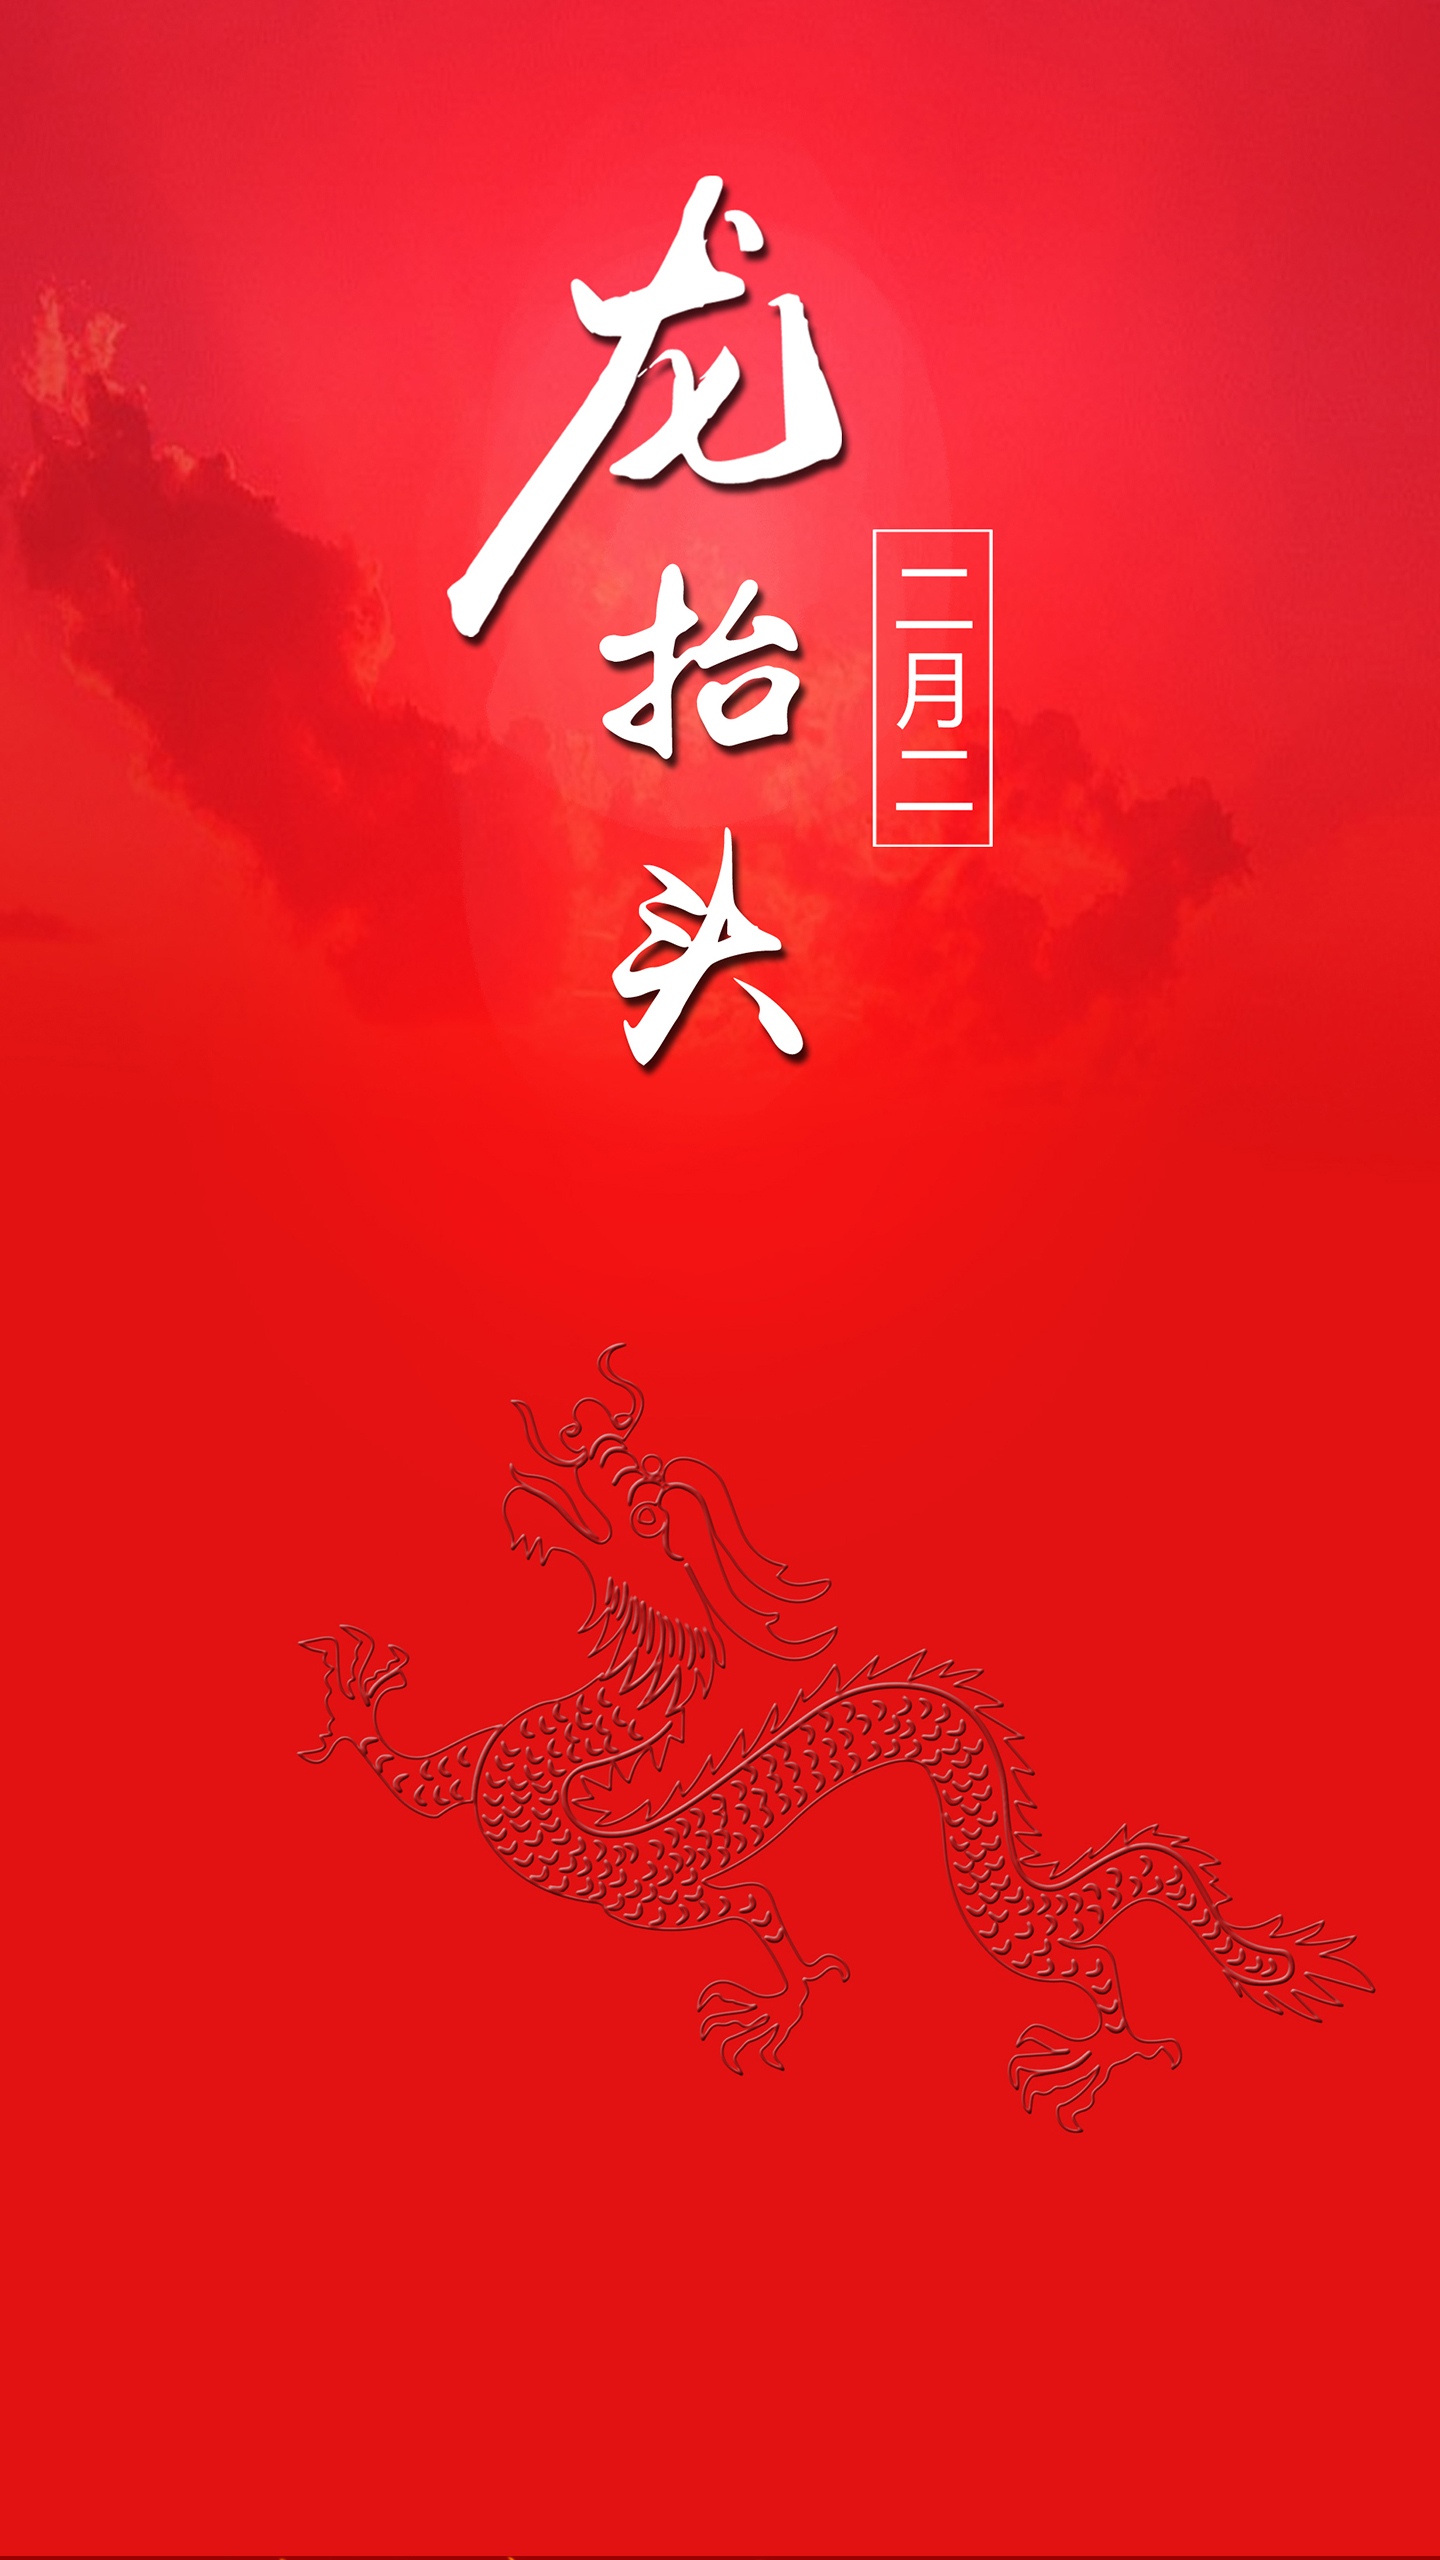 红色背景 <span style='color:red;'>二月二</span>龙抬头文字手机壁纸图片 中国红